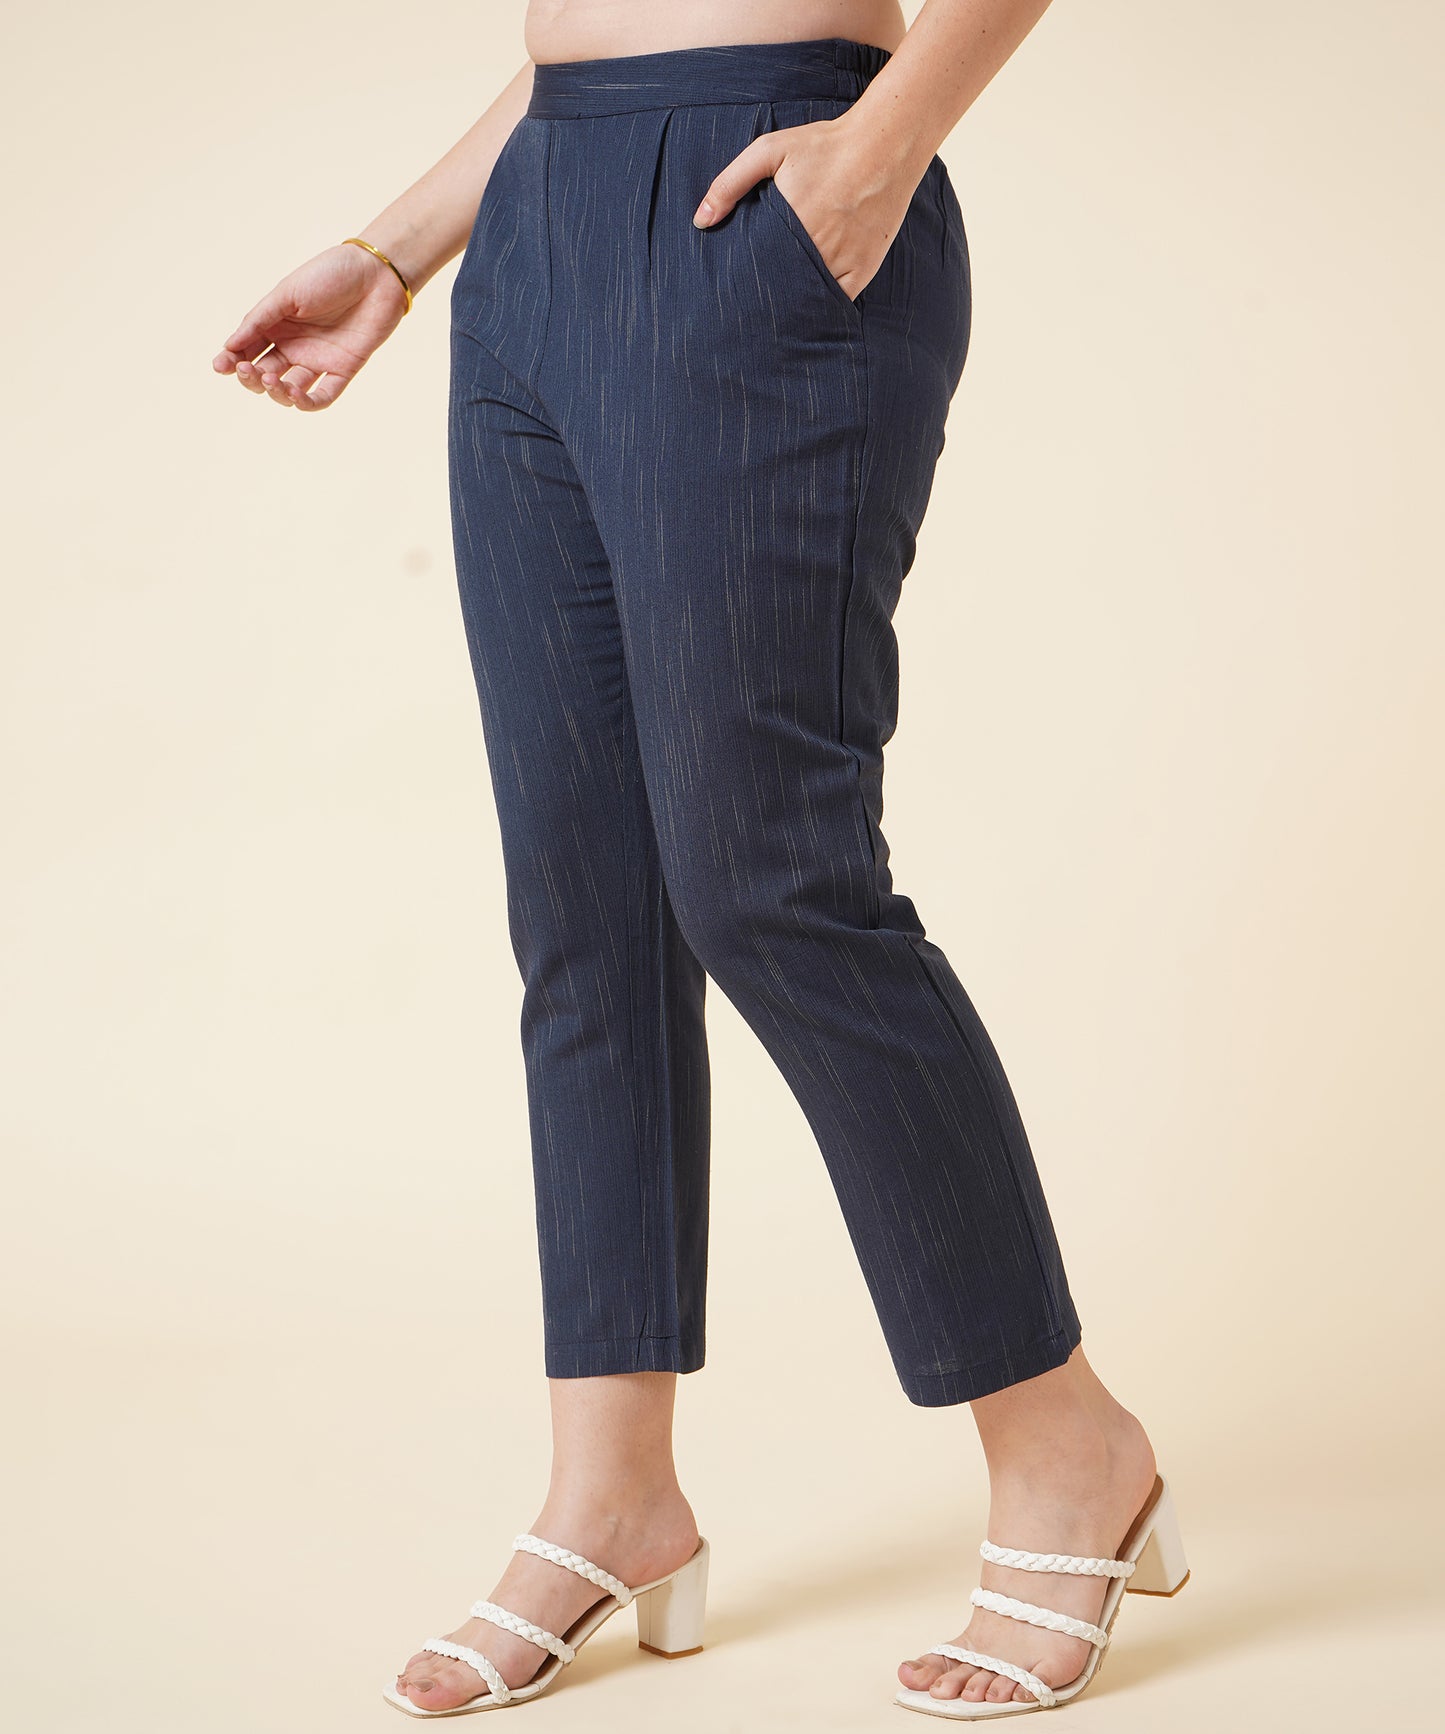 Cotton Kurta Set With Pants Striped Design Pattern, Navy Blue